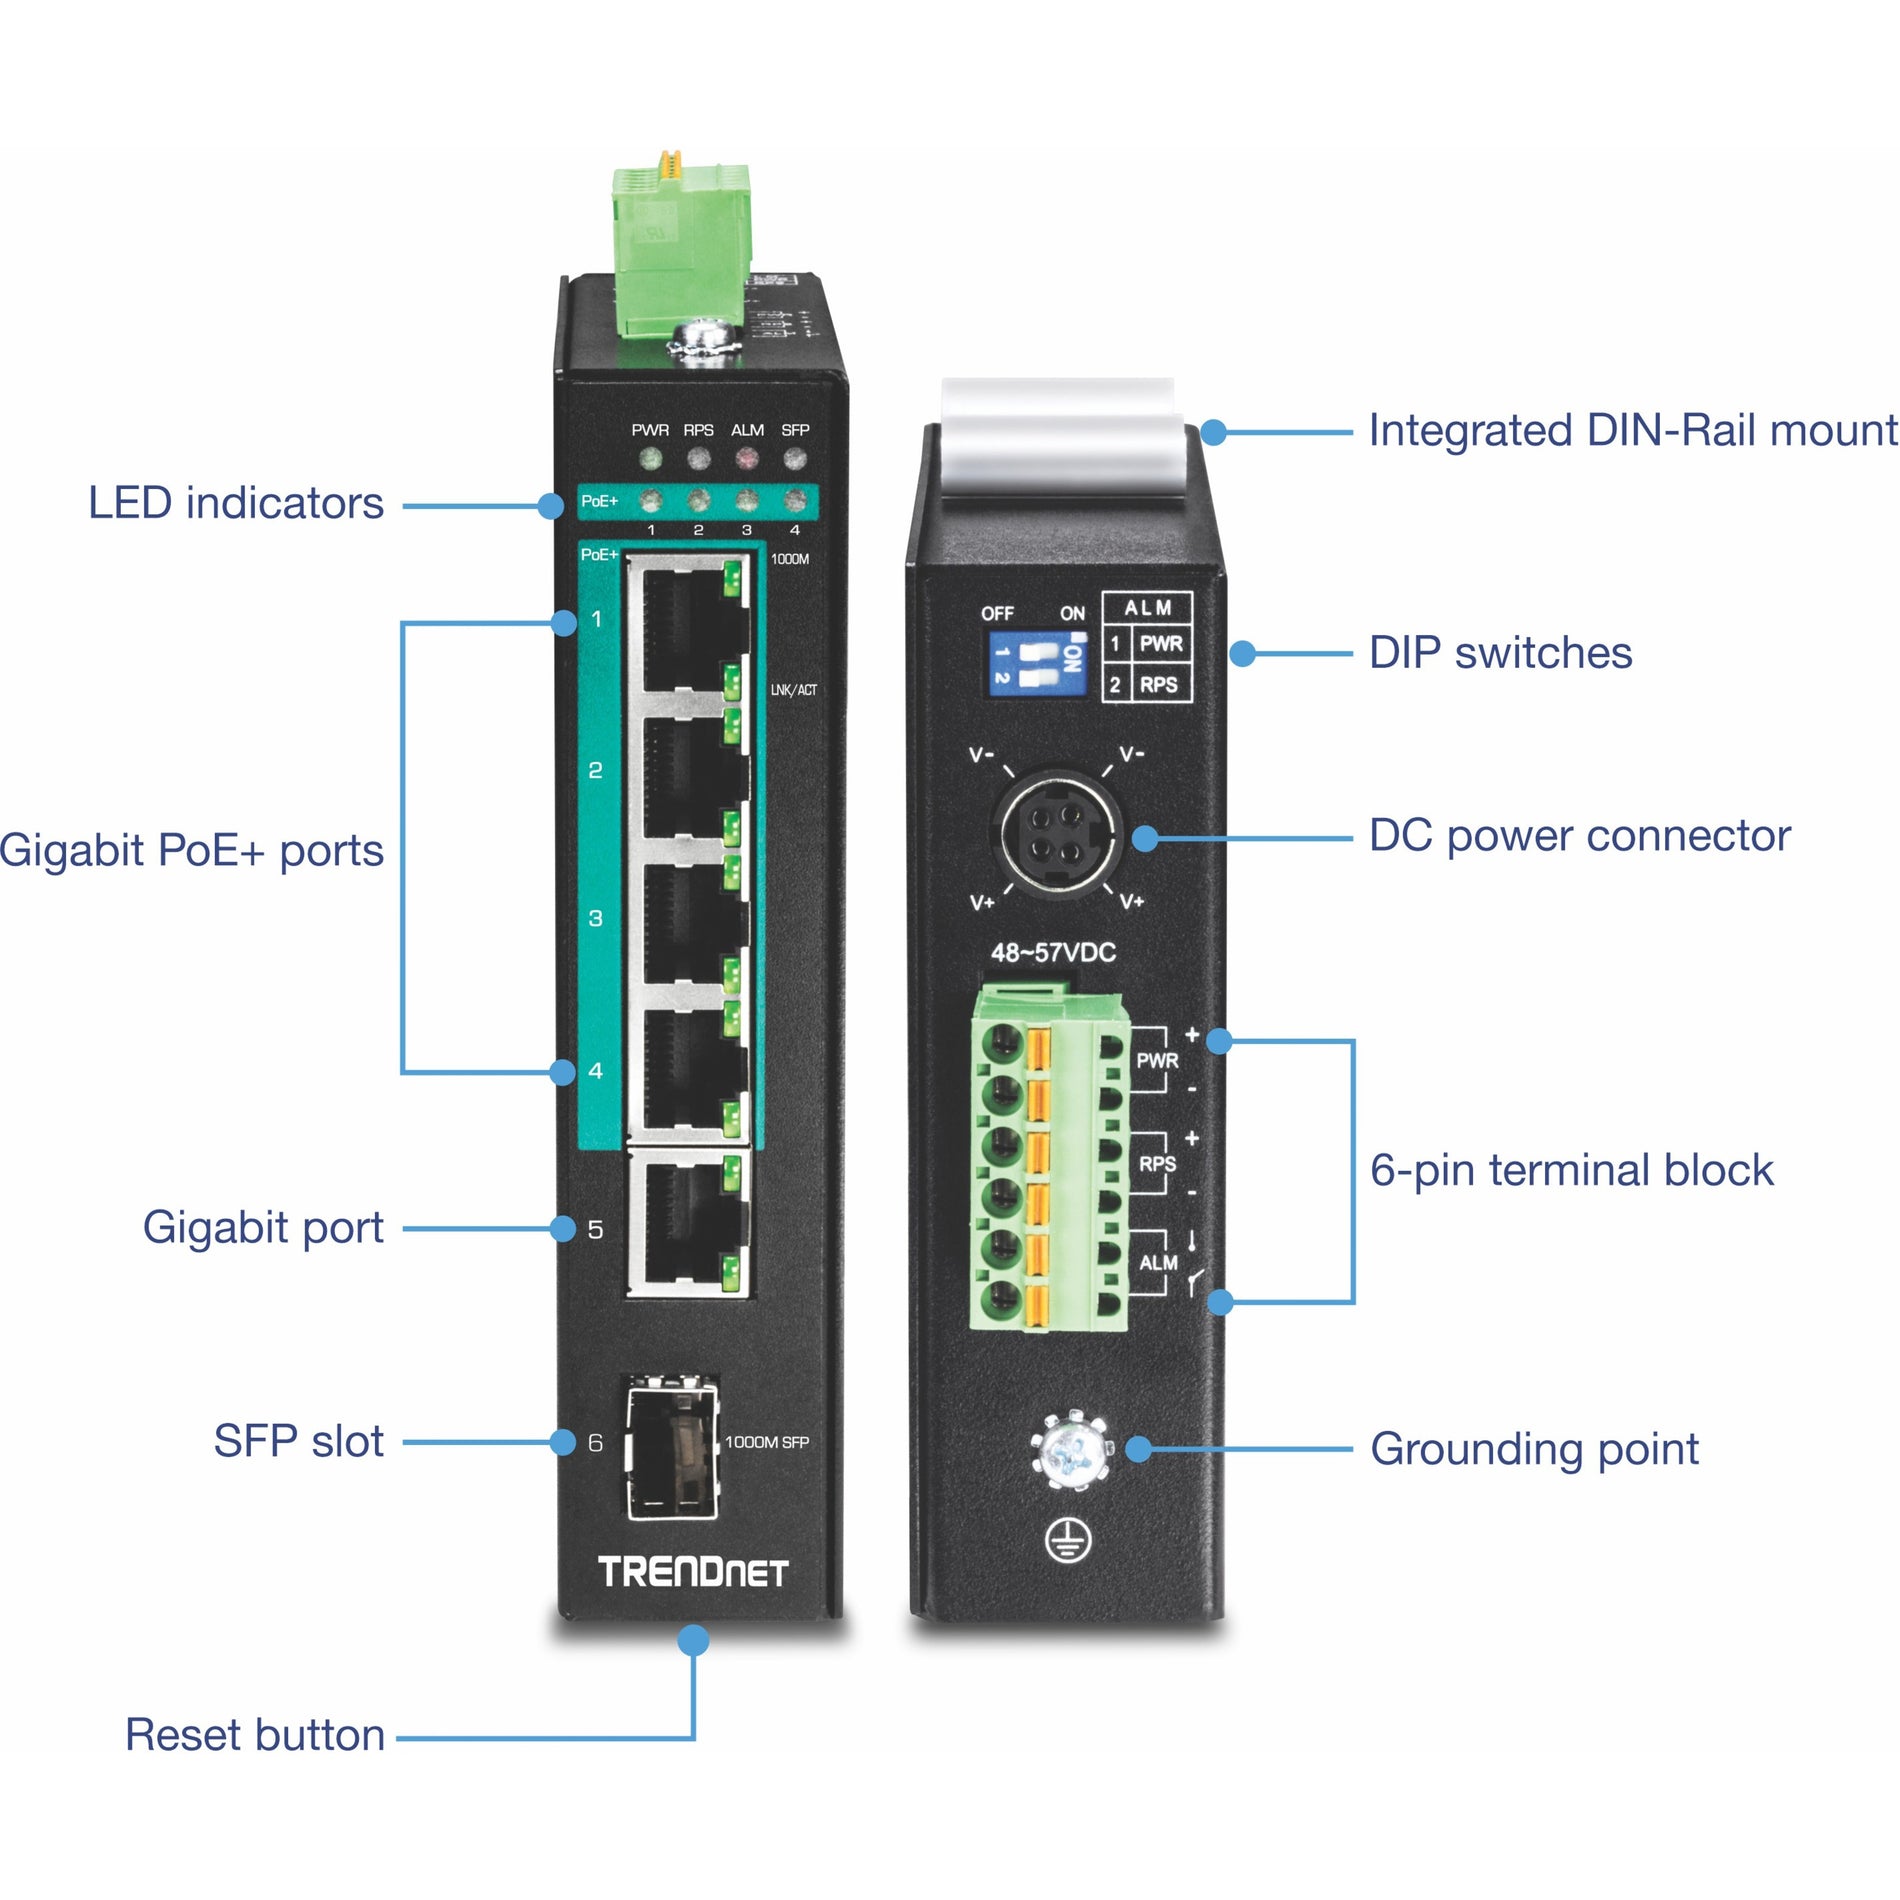 TRENDnet TI-PG541i 6-port hardened Industrial Gigabit PoE+ Layer 2 Managed DIN-Rail Switch, TAA/NDAA Compliant, Lifetime Warranty